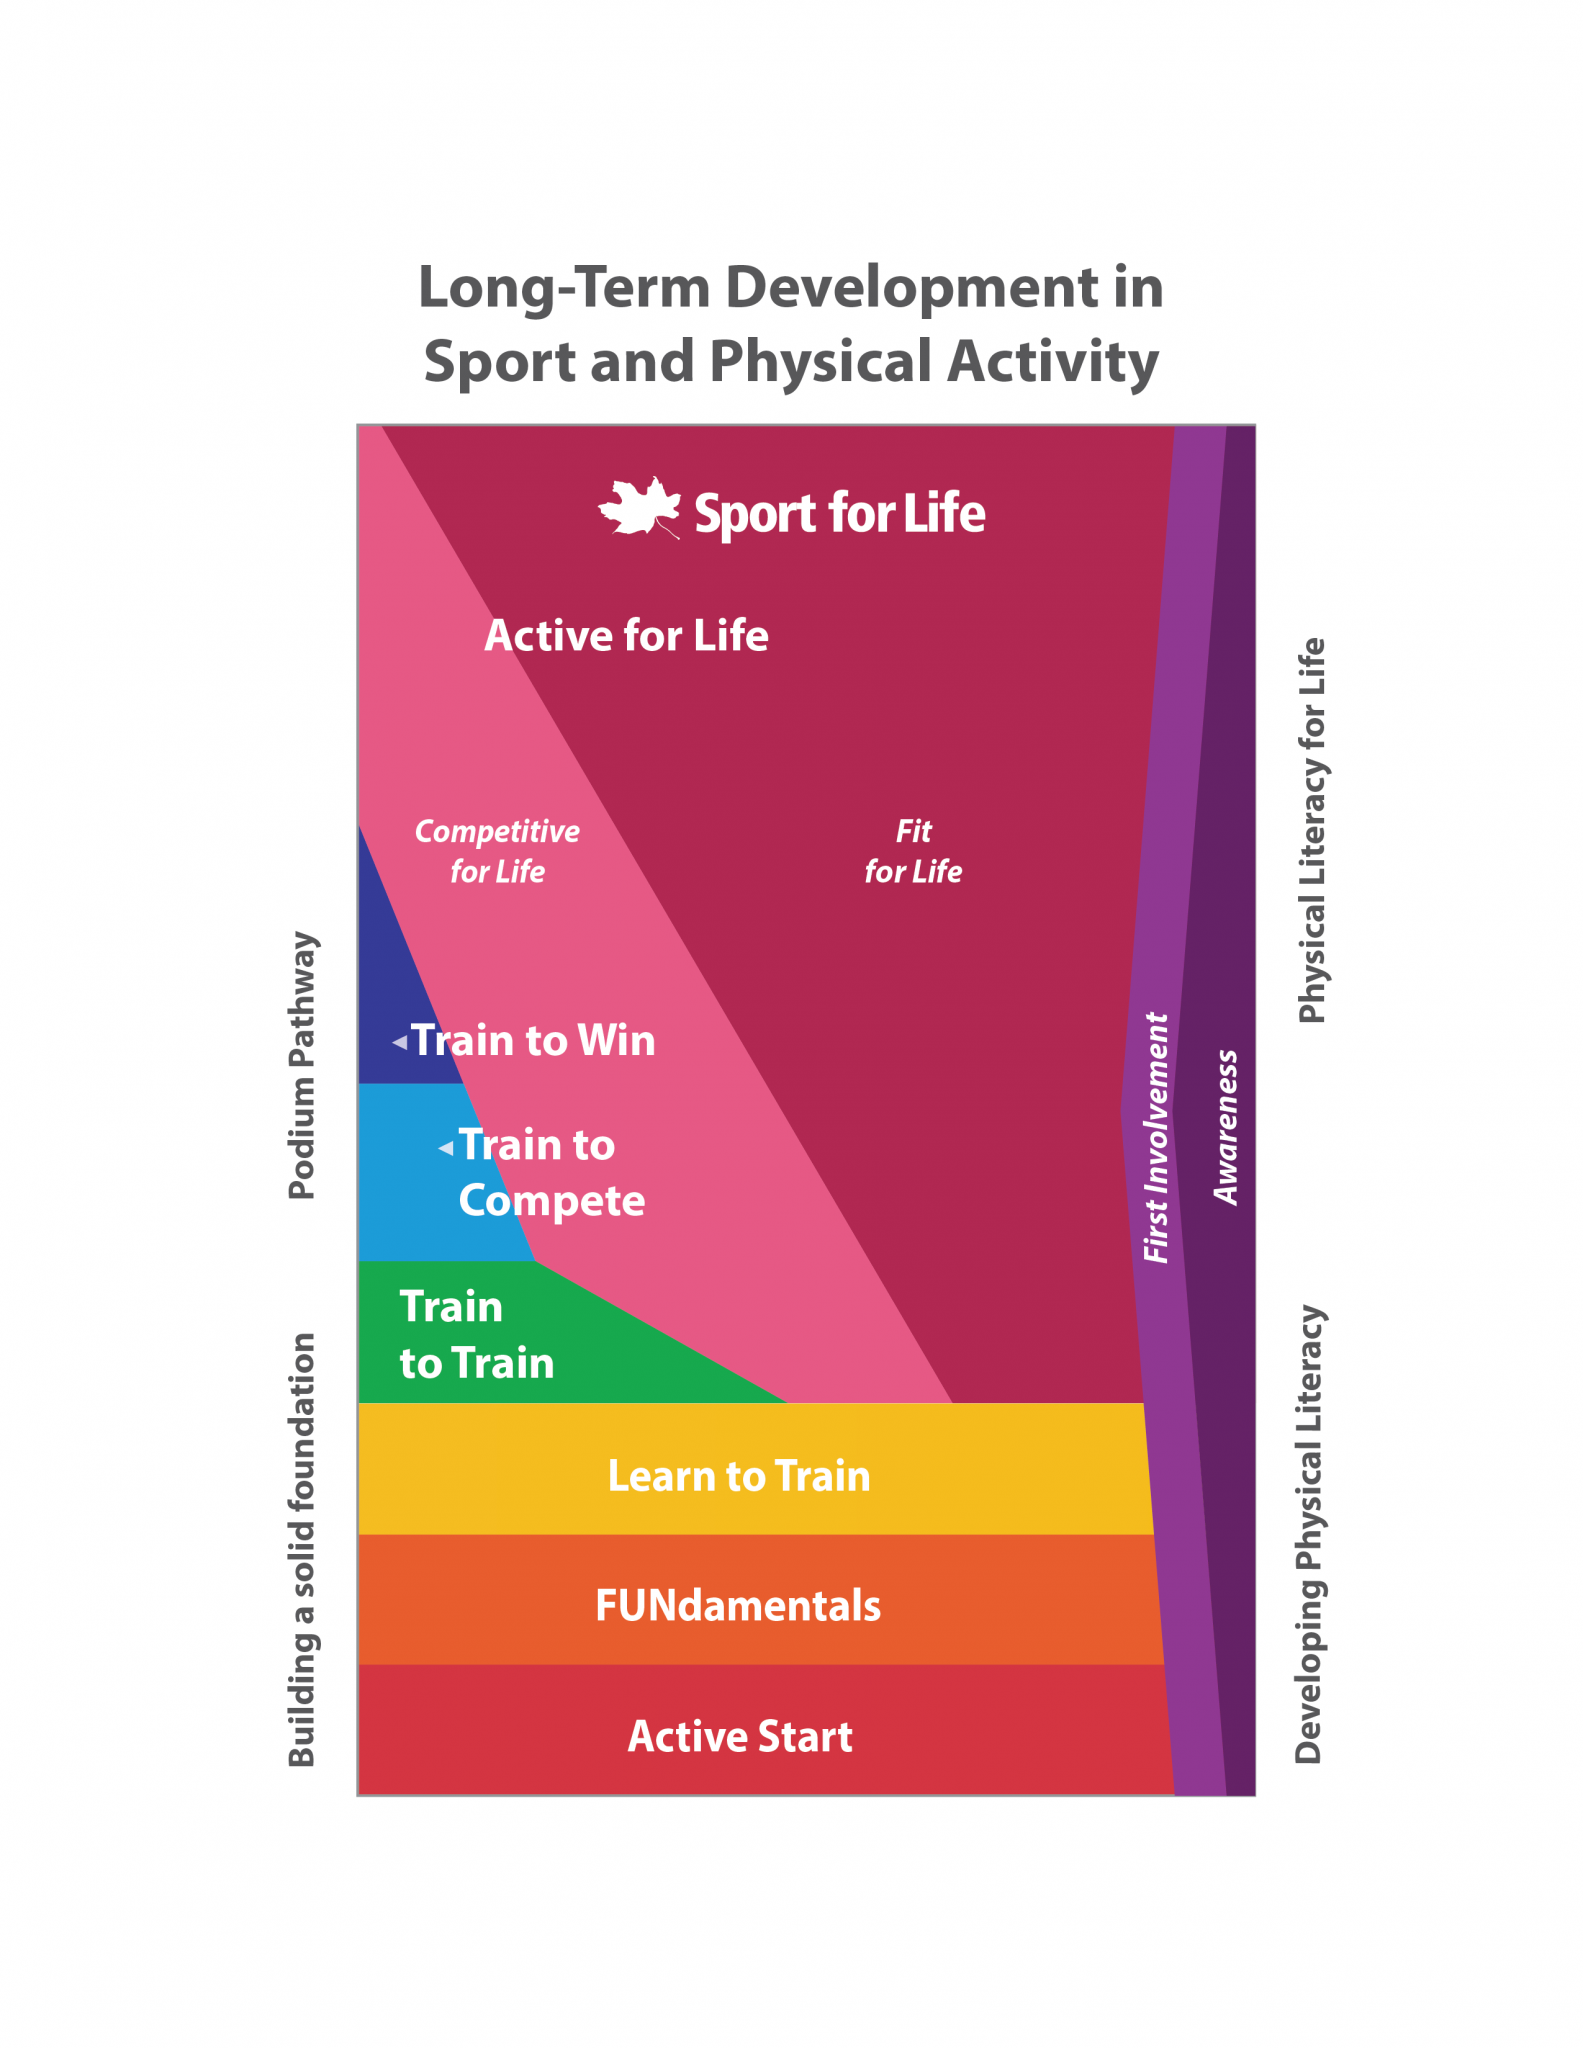 Long-Term Development - Sport for Life